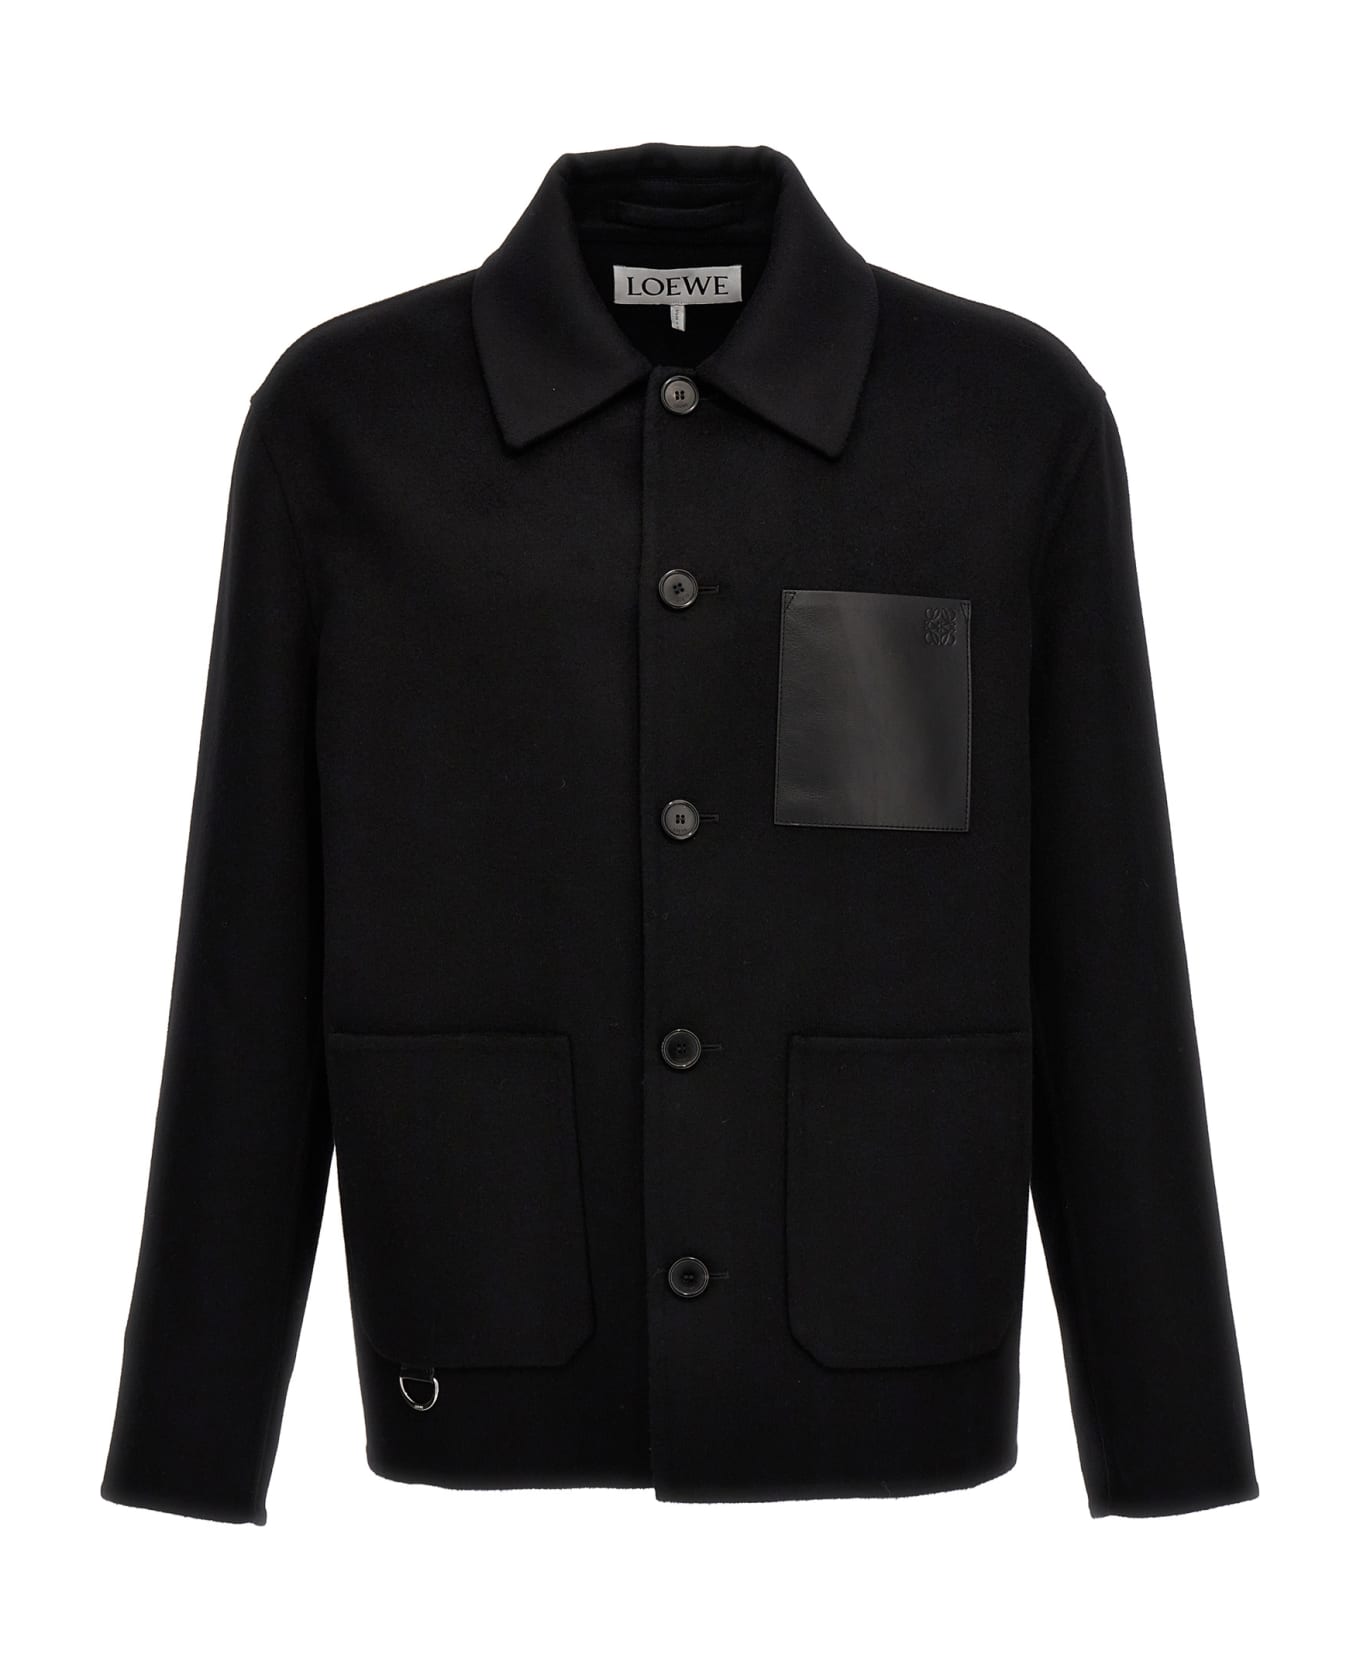 Loewe 'wrokwear' Jacket - Black   ジャケット